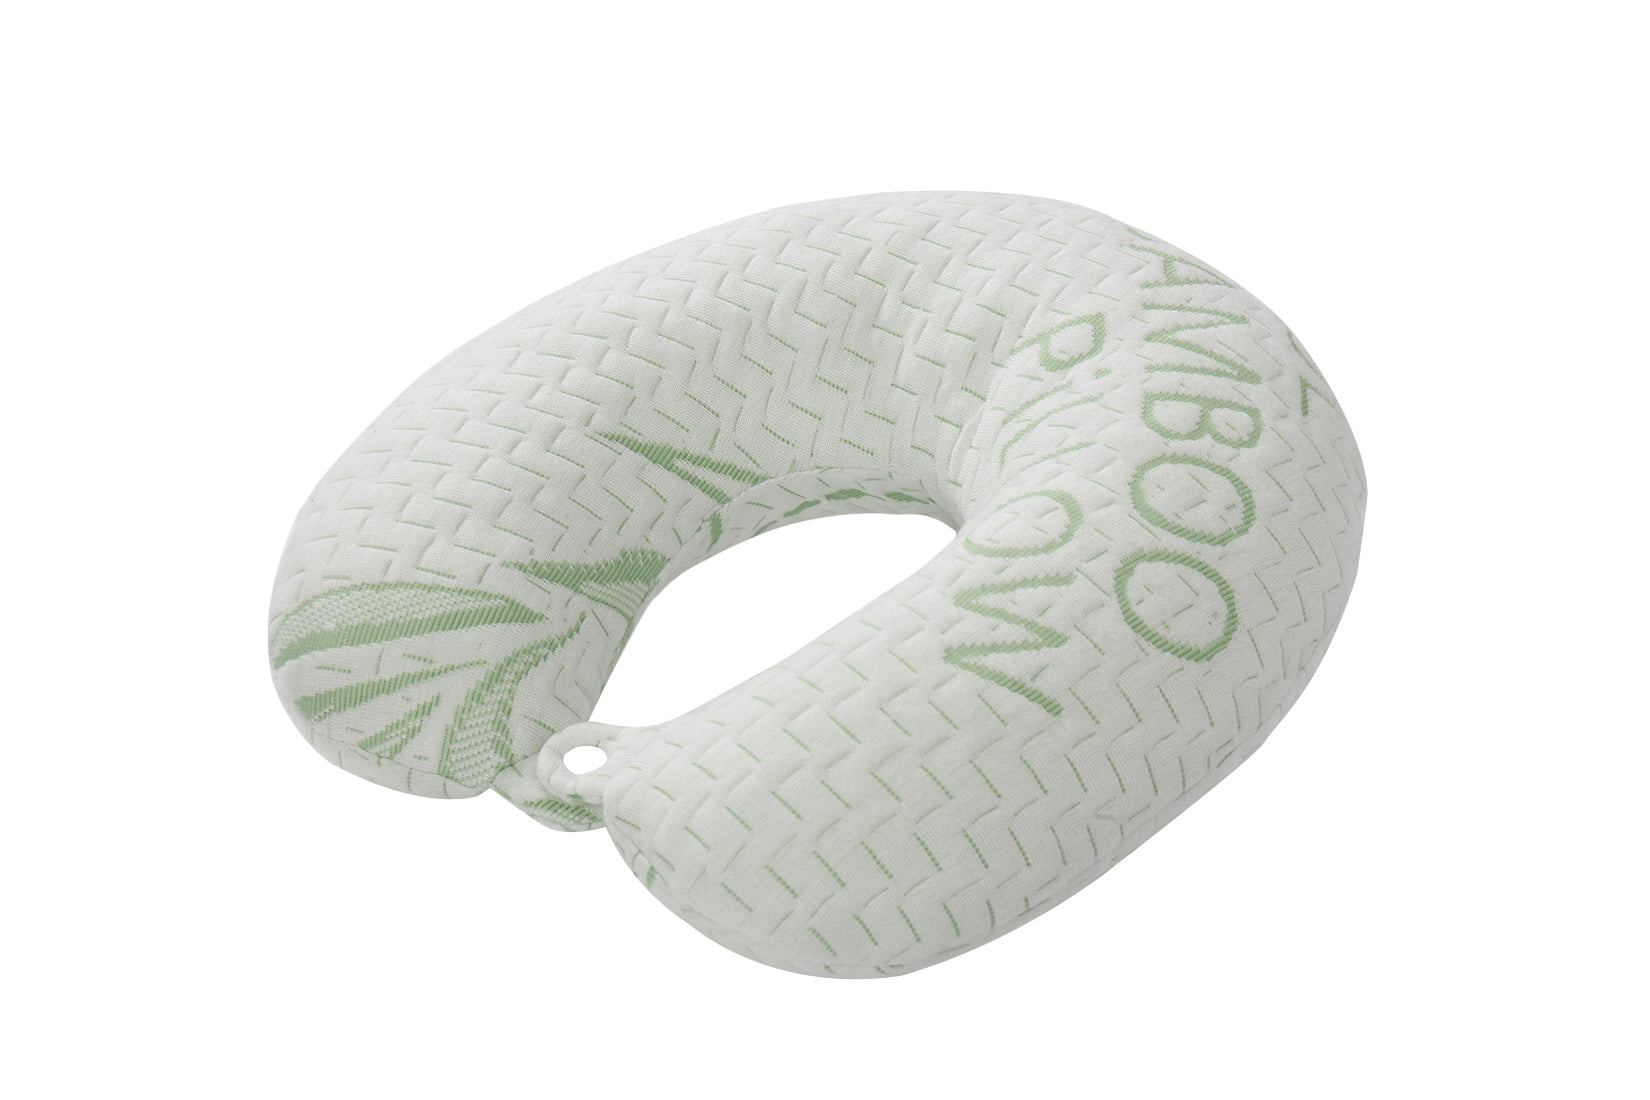 Cool Bamboo – Neck Travel Pillow